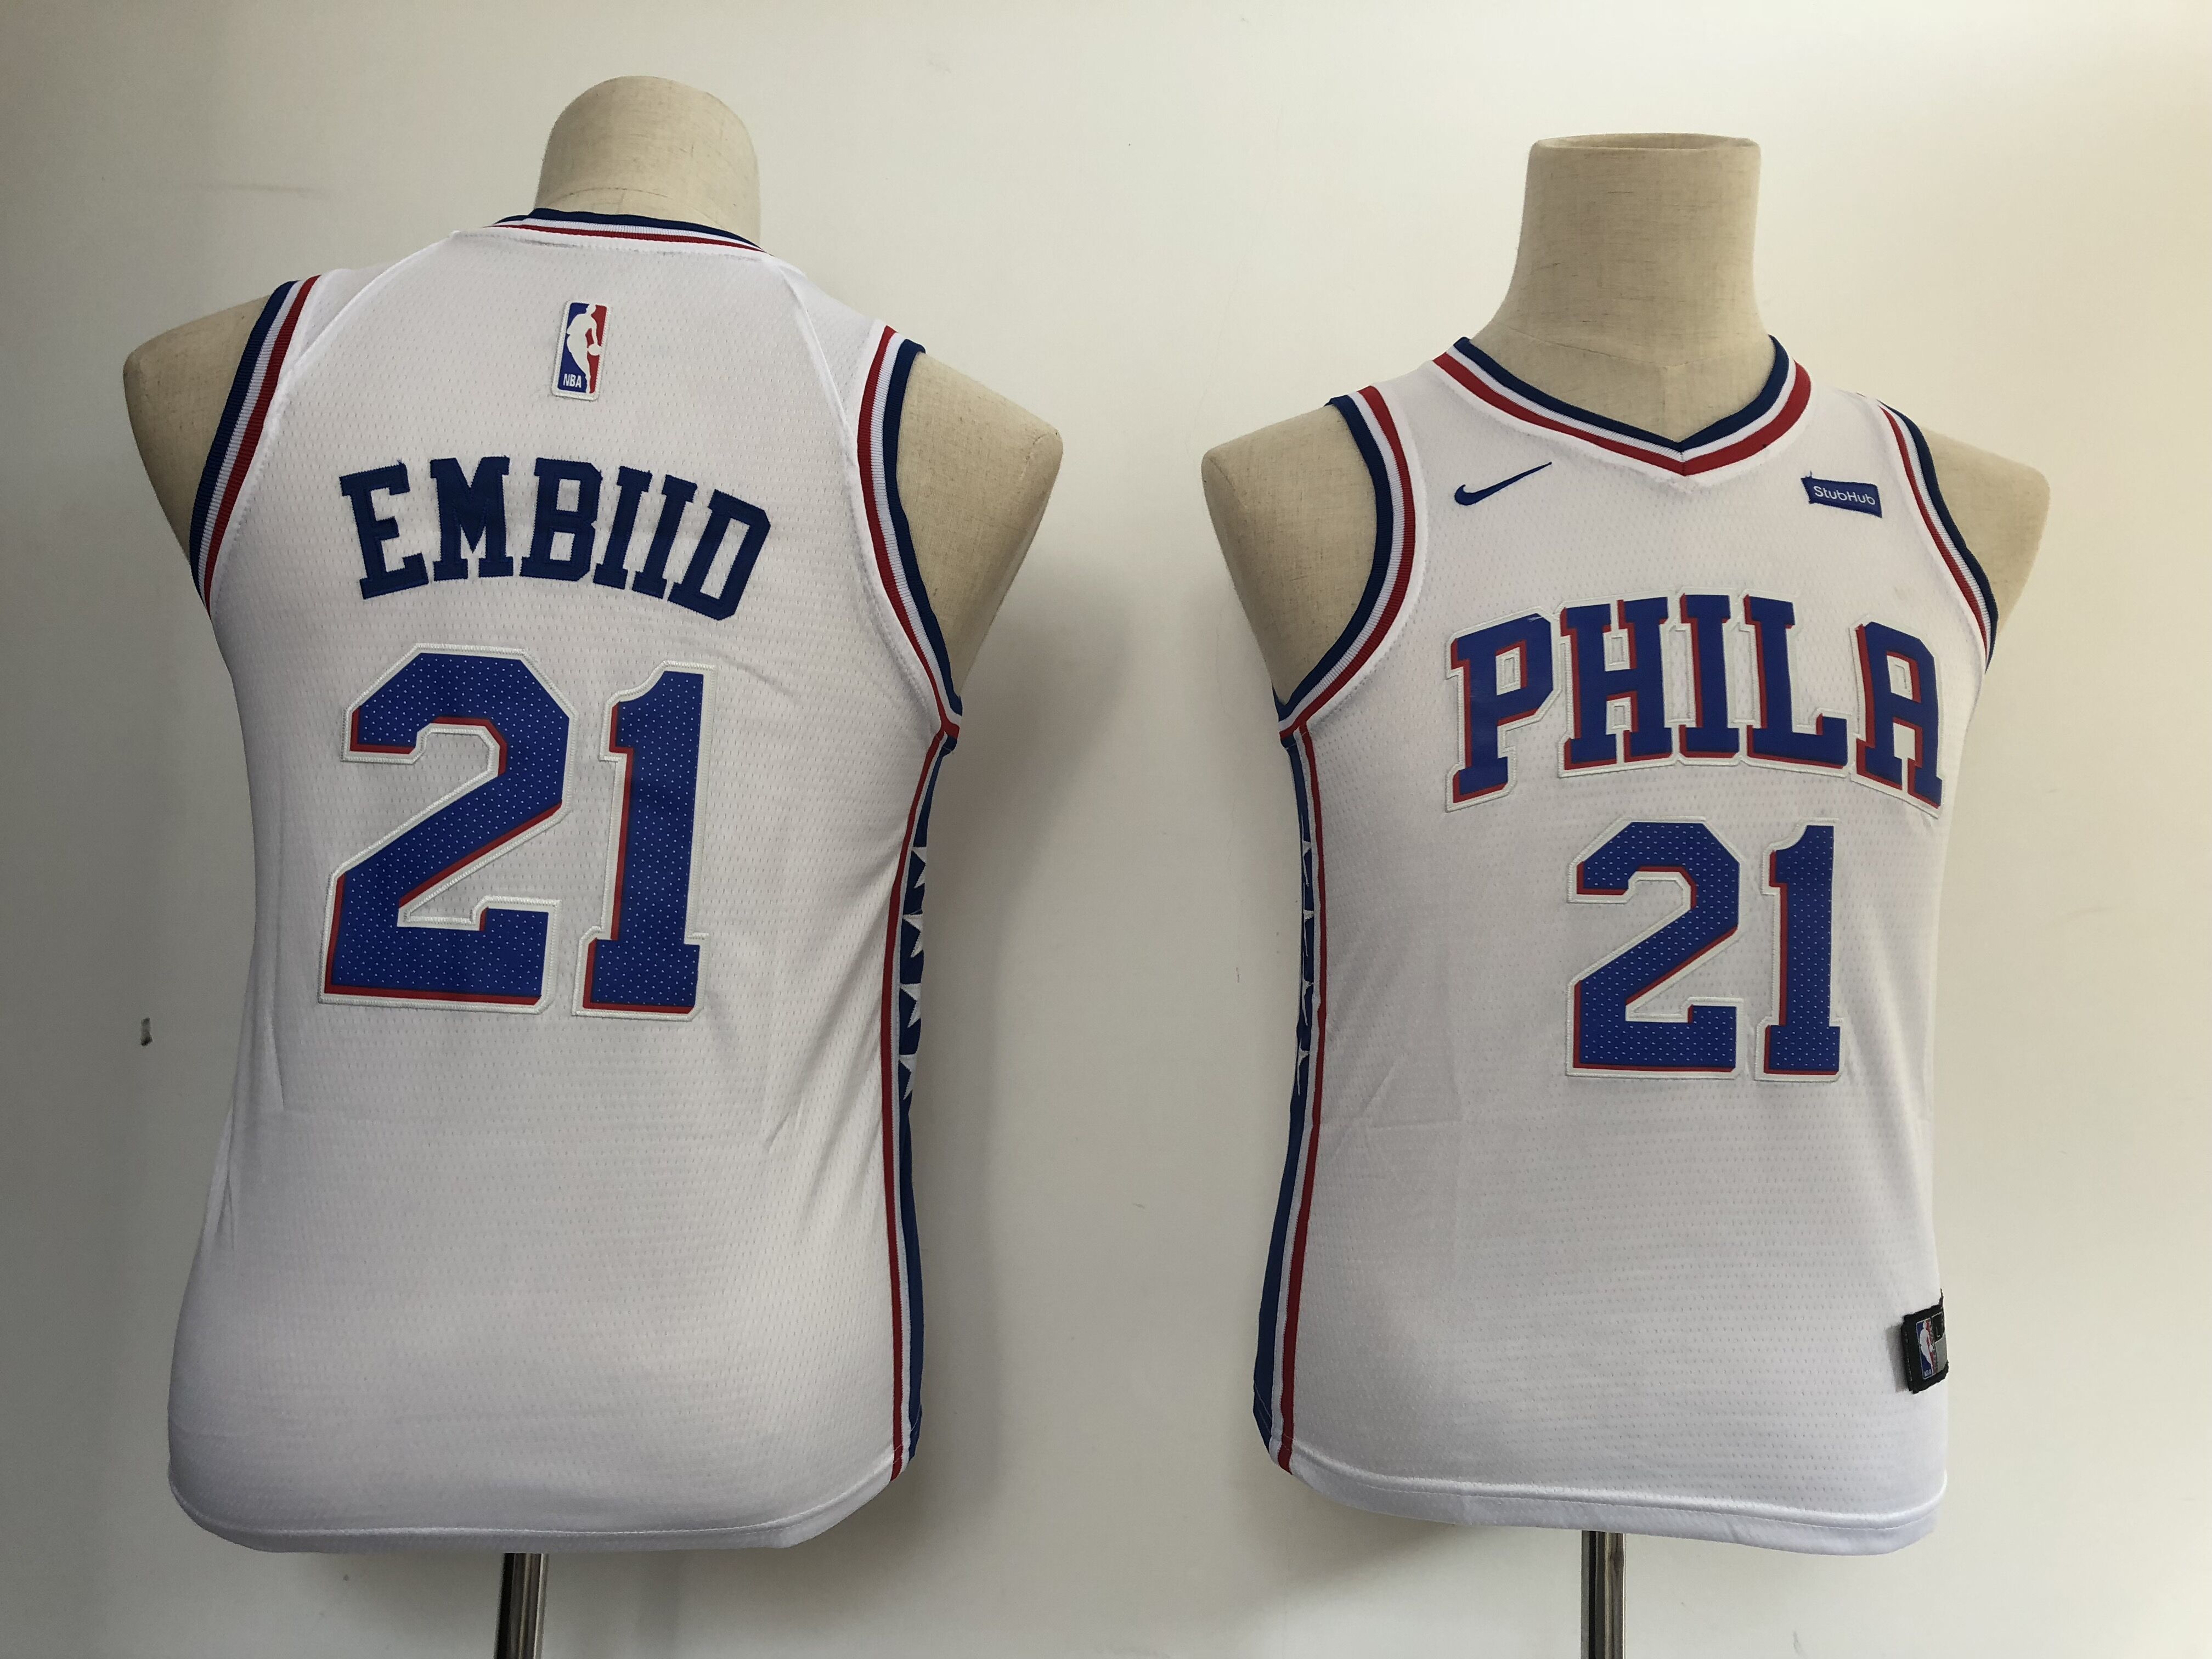 Youth Philadelphia 76ers #21 Embiid white Nike NBA Jerseys